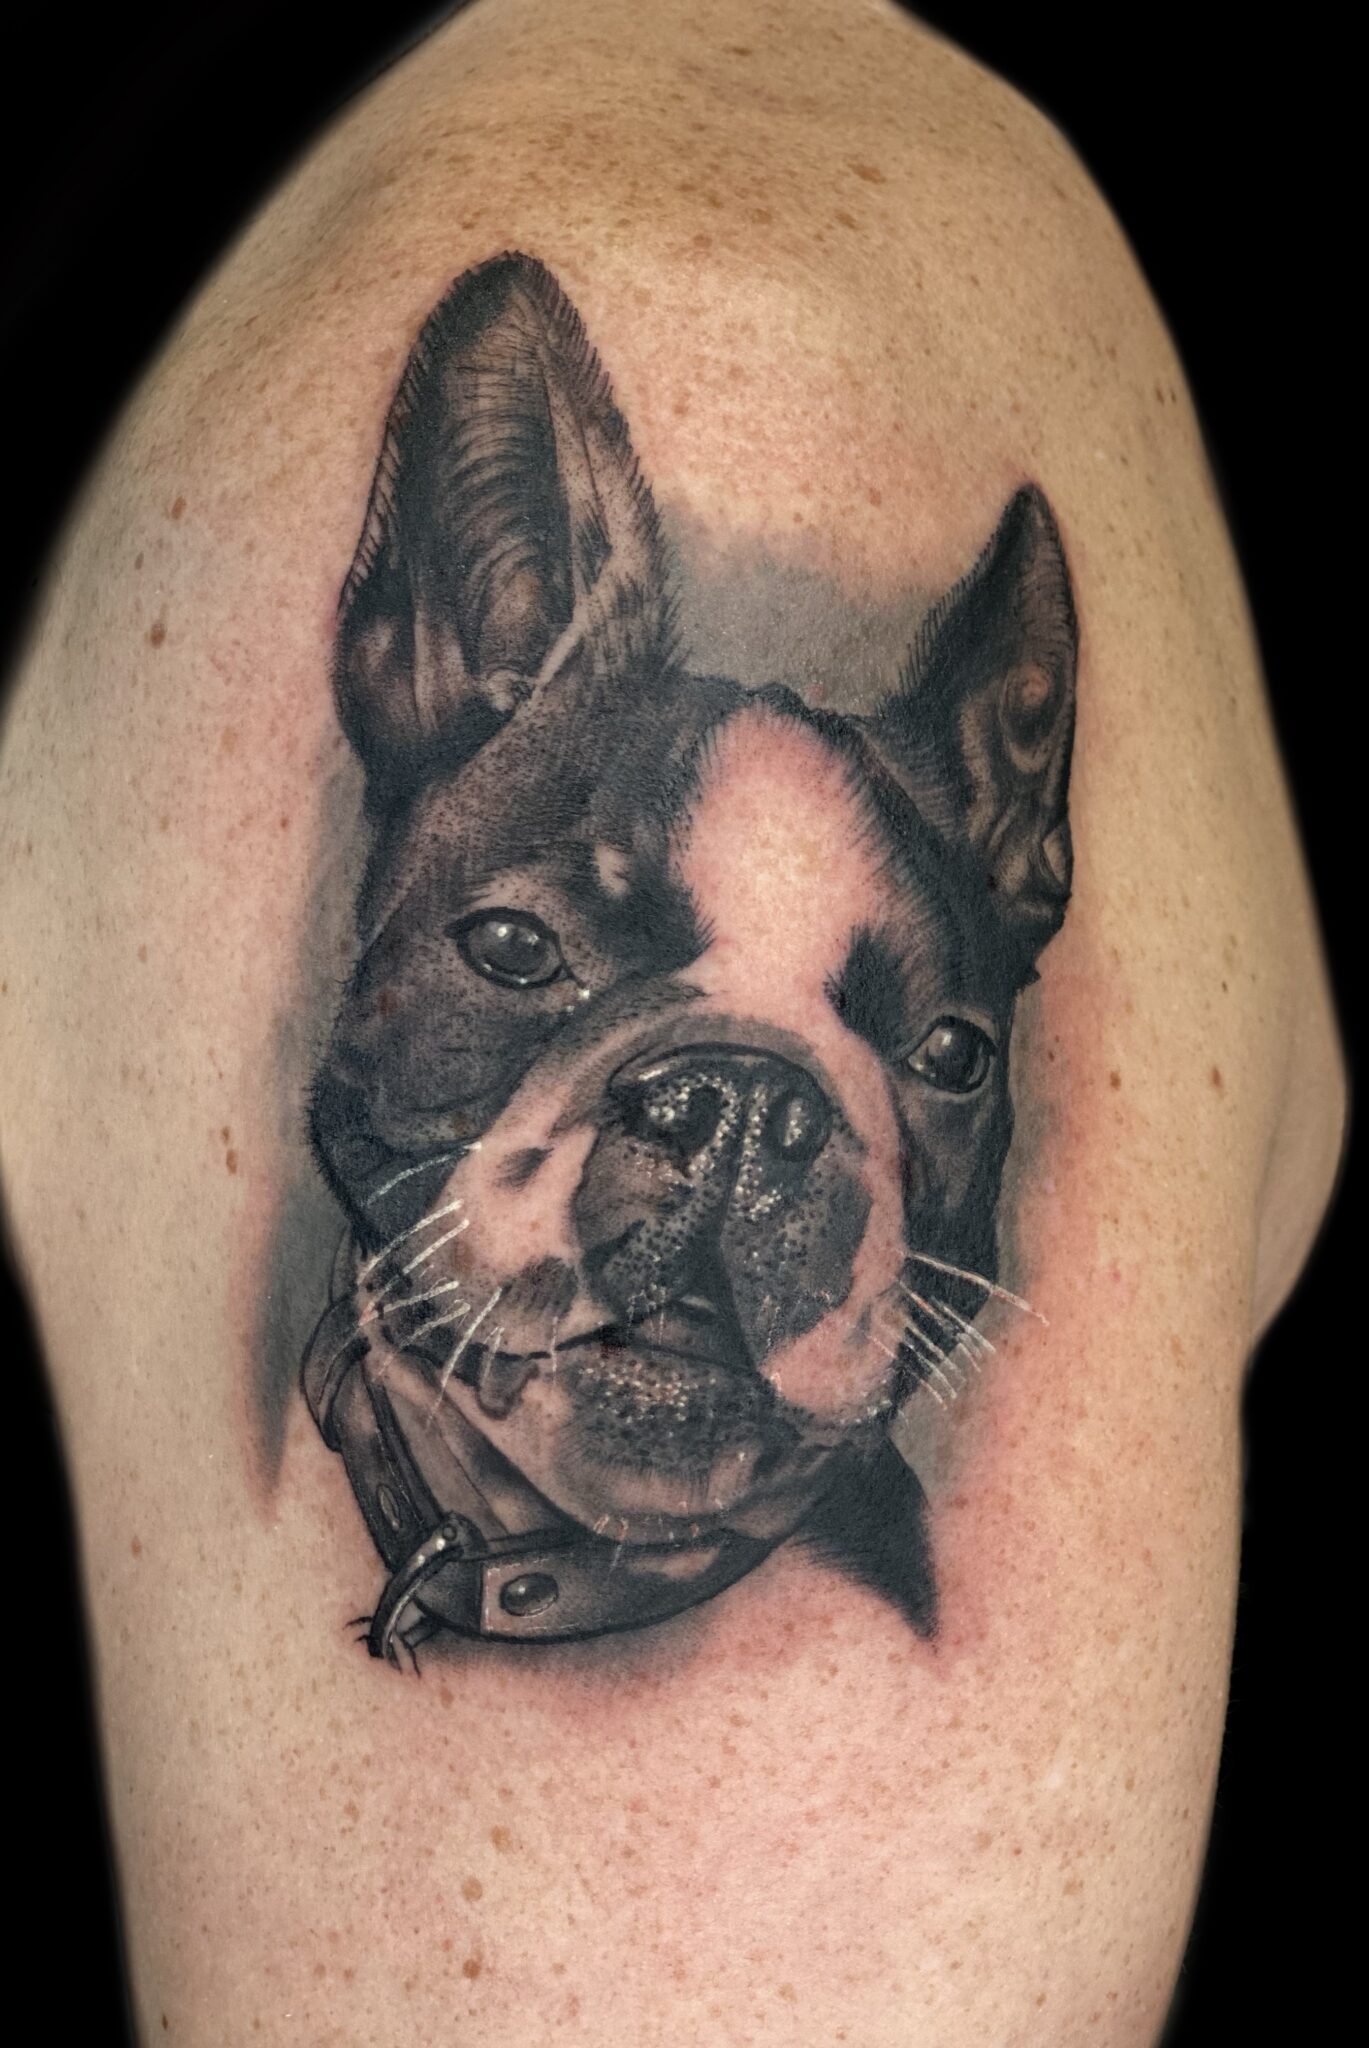 Photorealistic dog portrait tattoo